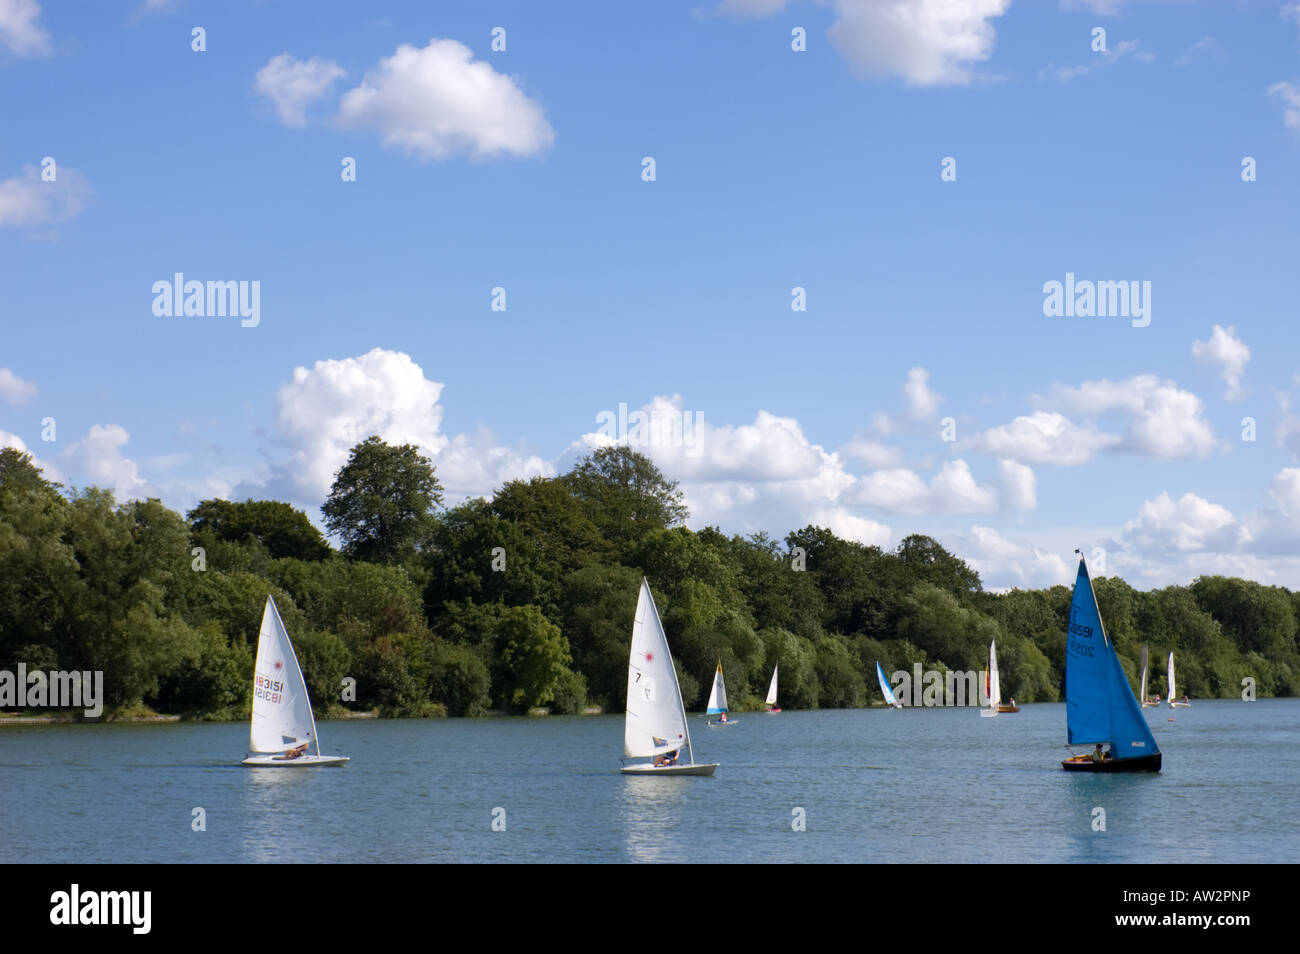 Sailing Boats on Windmill Lake, Earlswood Lakes, Earlswood, Solihull, West Midlands, England, UK Stock Photo